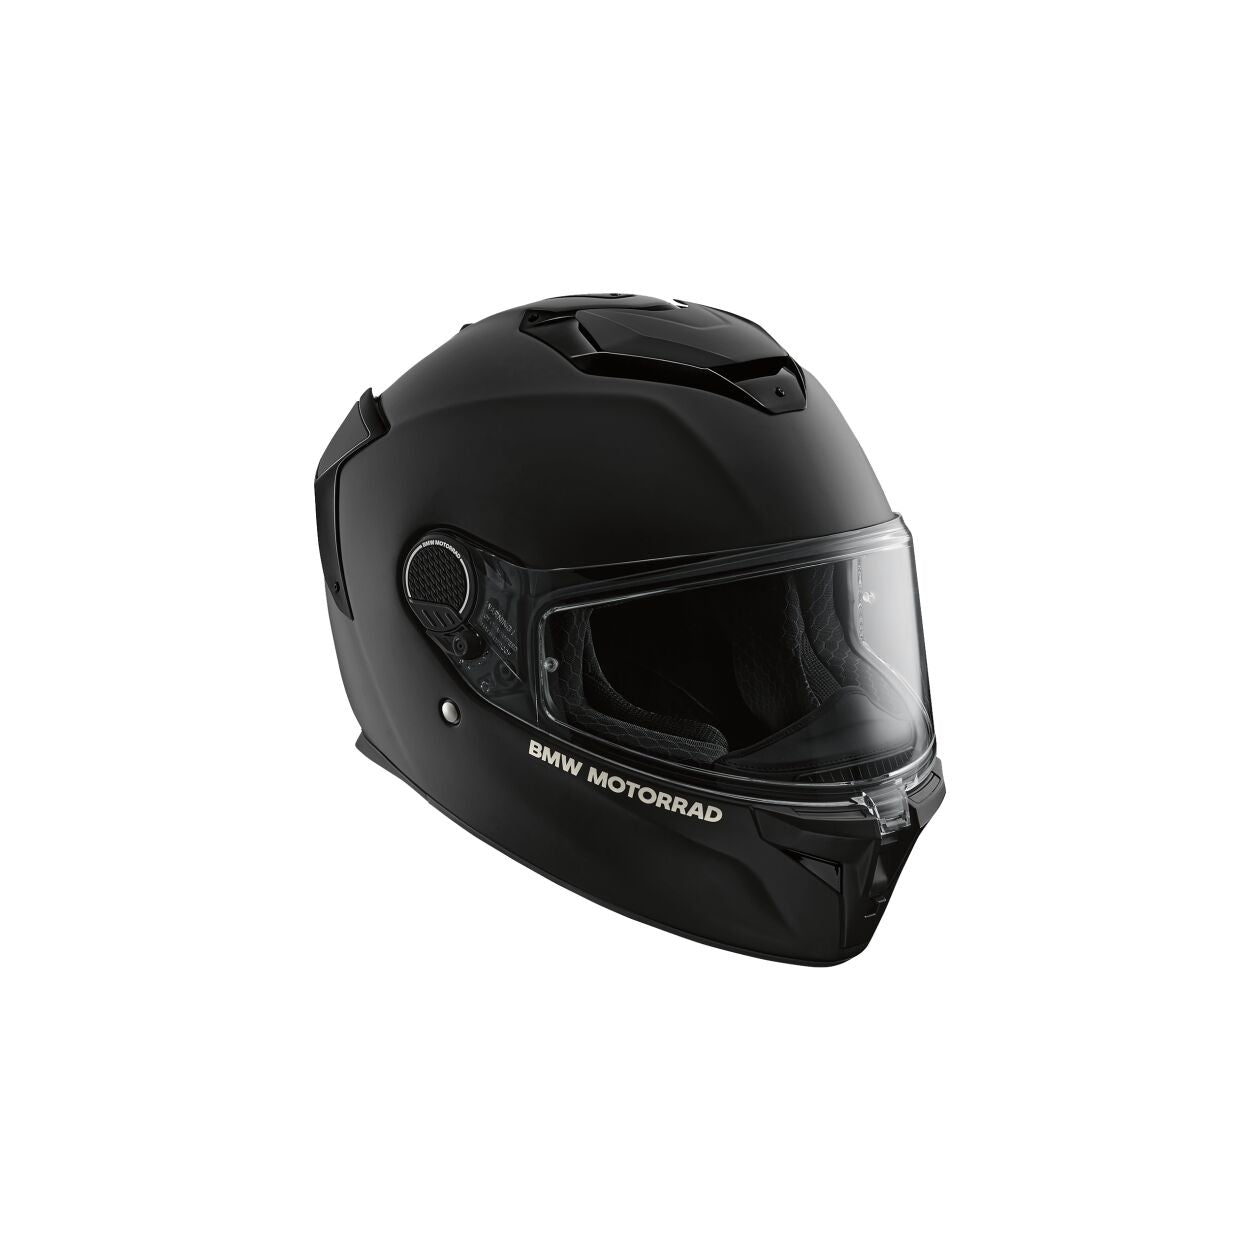 BMW Xomo Carbon helmet